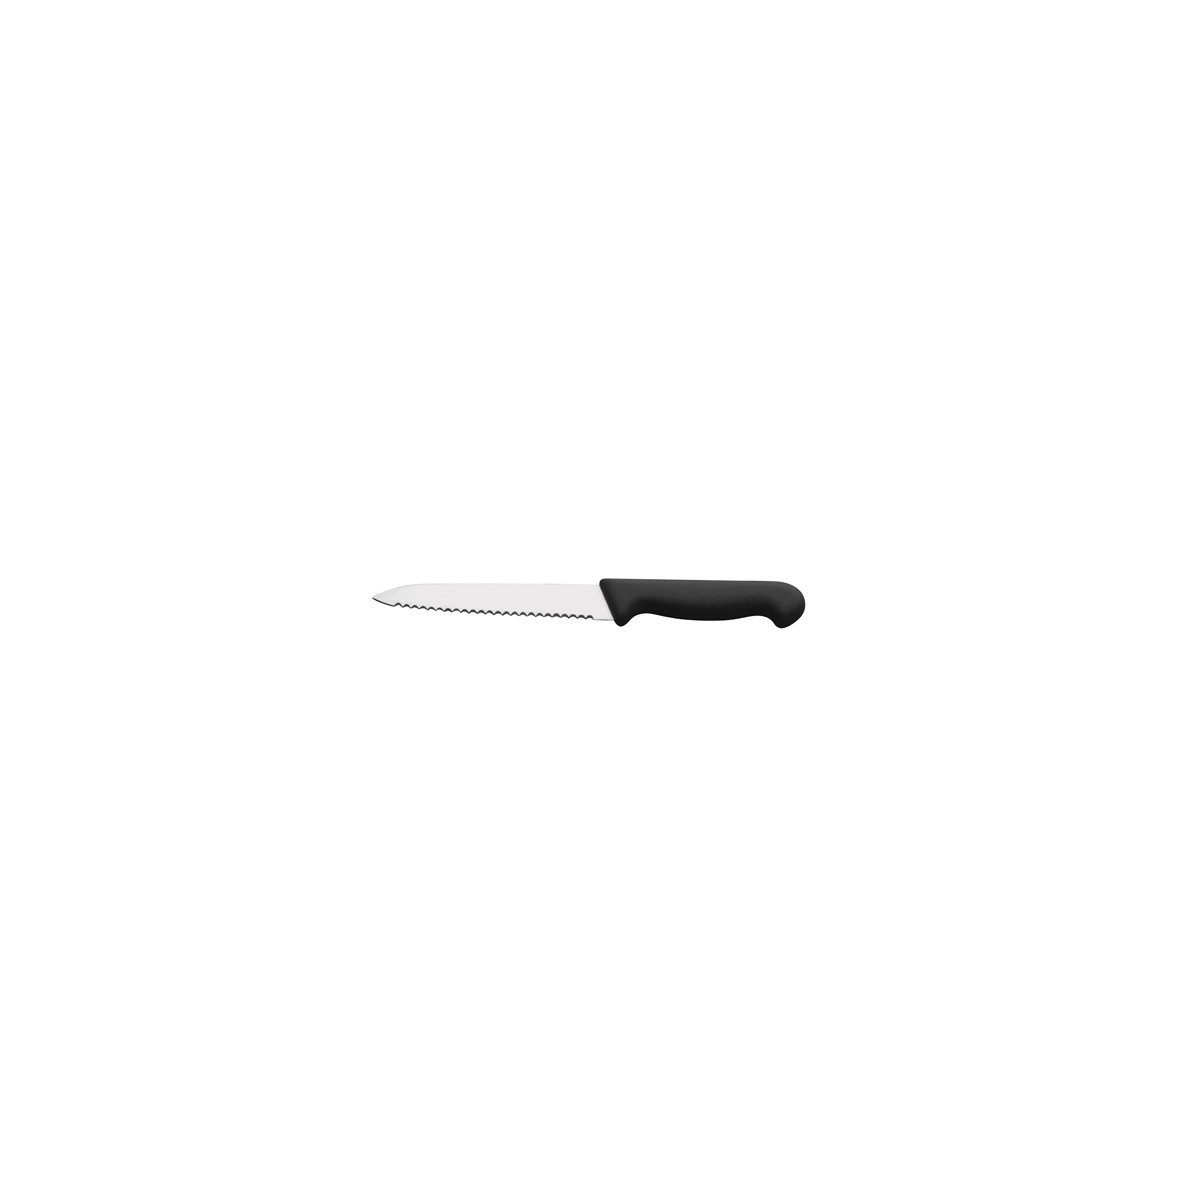 25005 Ivo Professional 55000 Utility Knife Serrated Blade 130mm Tomkin Australia Hospitality Supplies